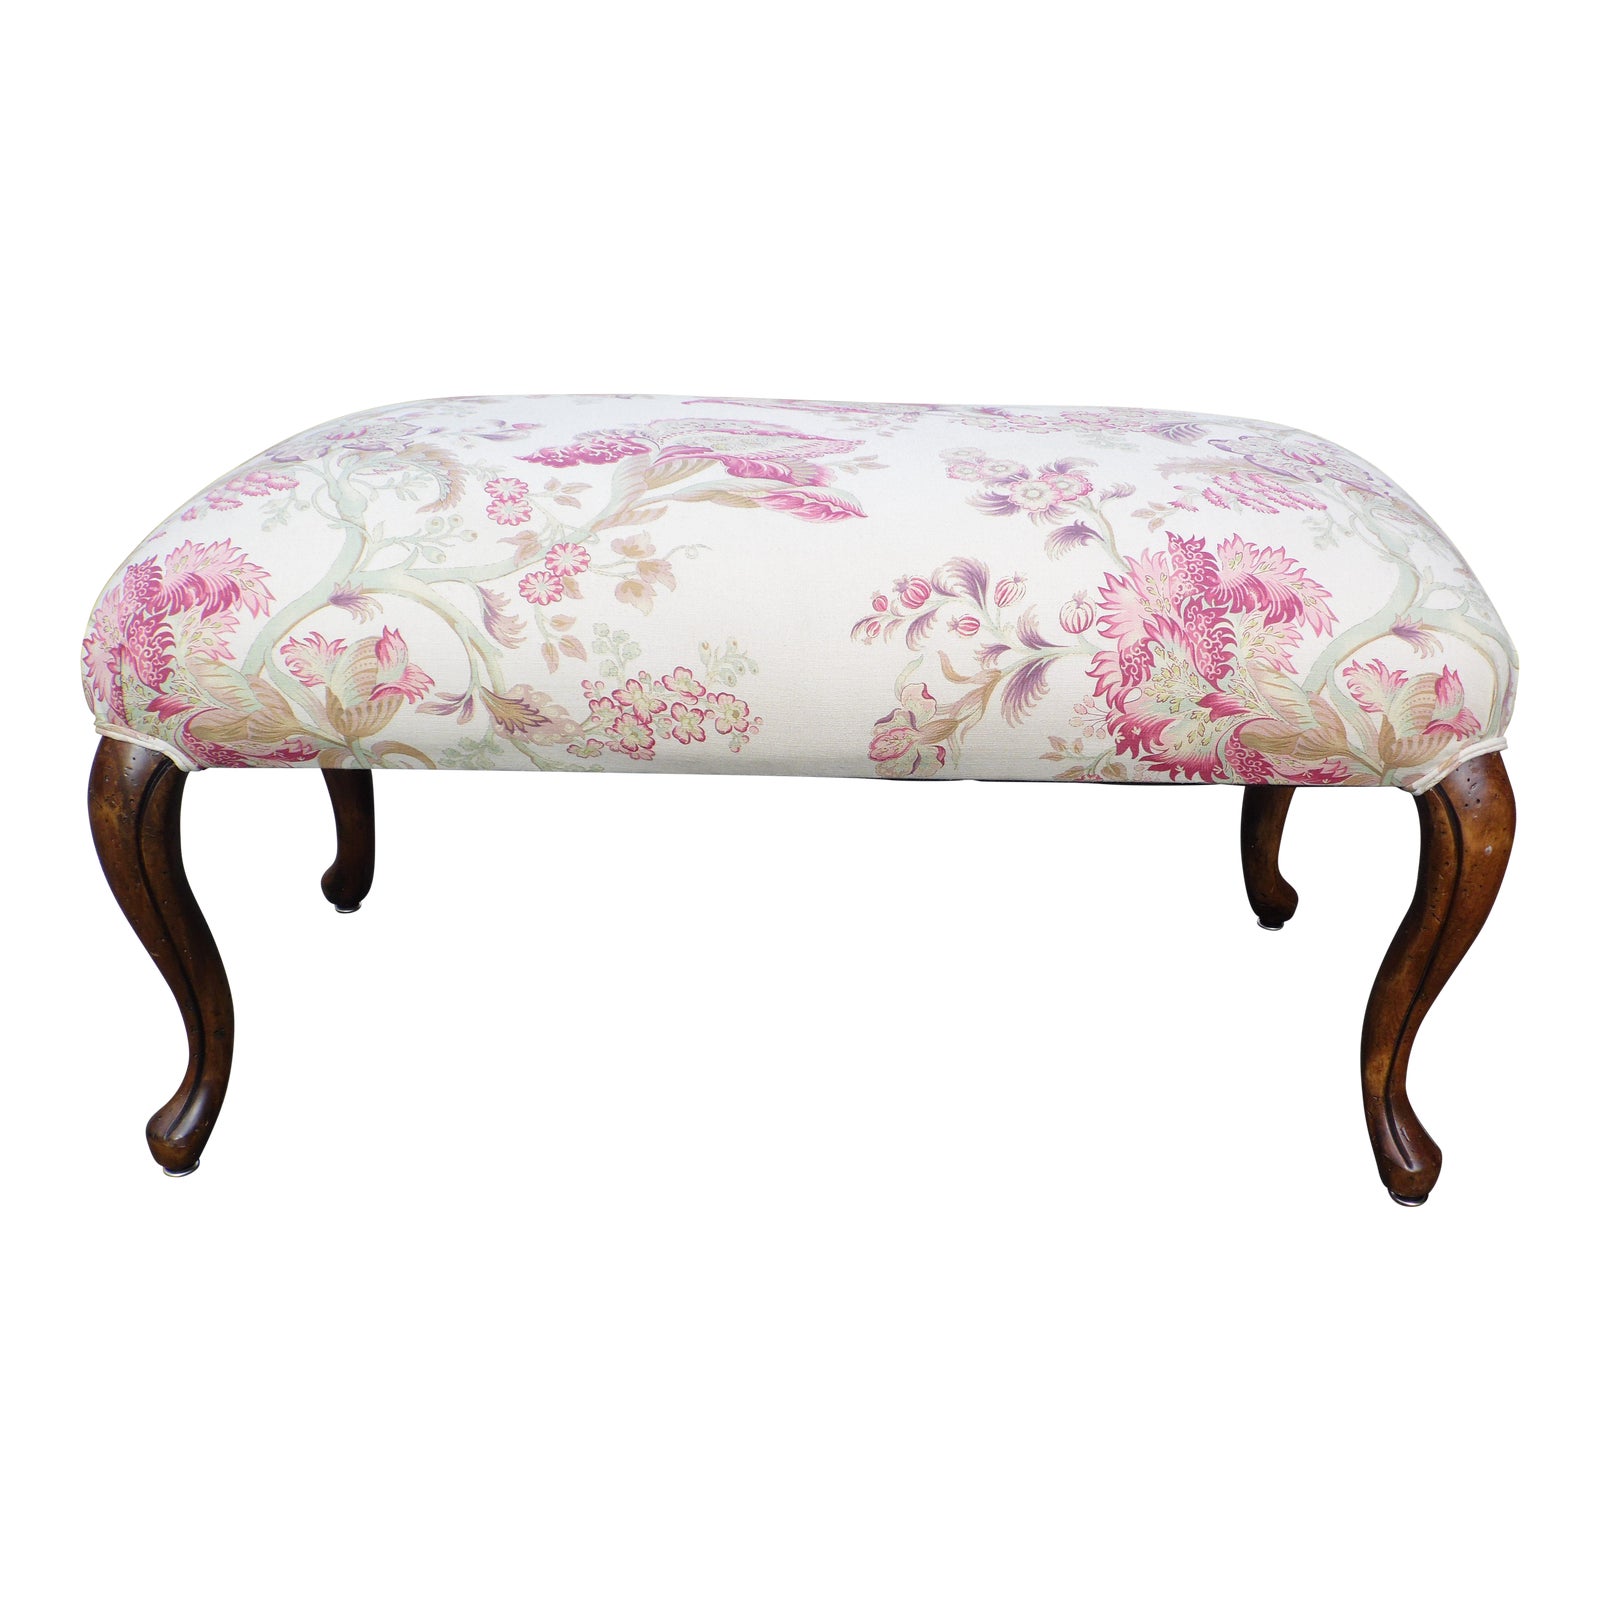 Vintage Upholstered Queen Anne Vanity, Antique Vanity Bench Seat